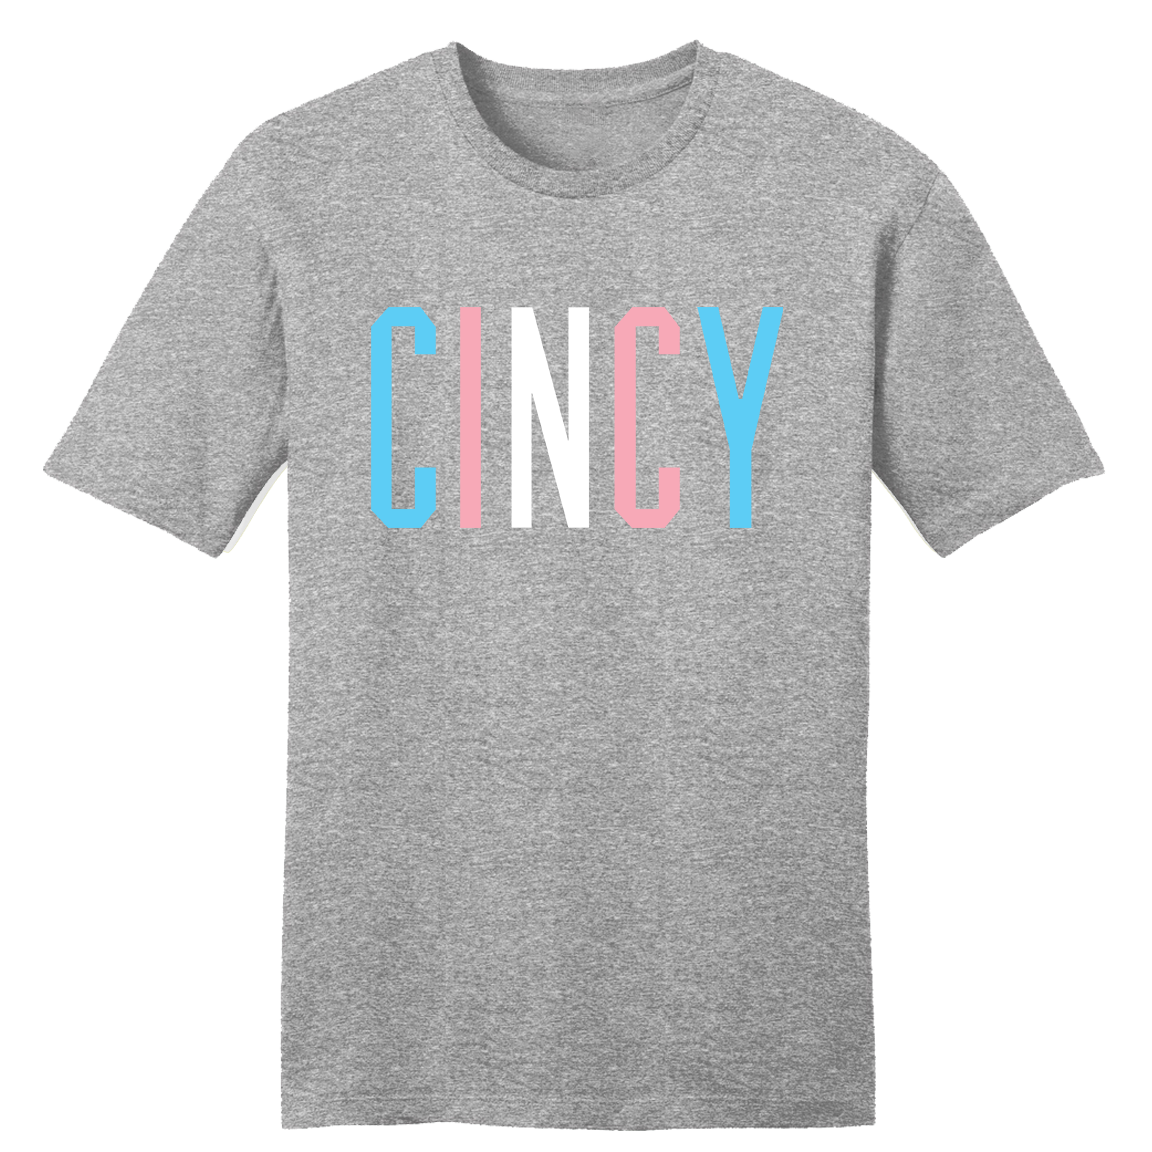 Cincy Block Pride Trans T-shirt grey